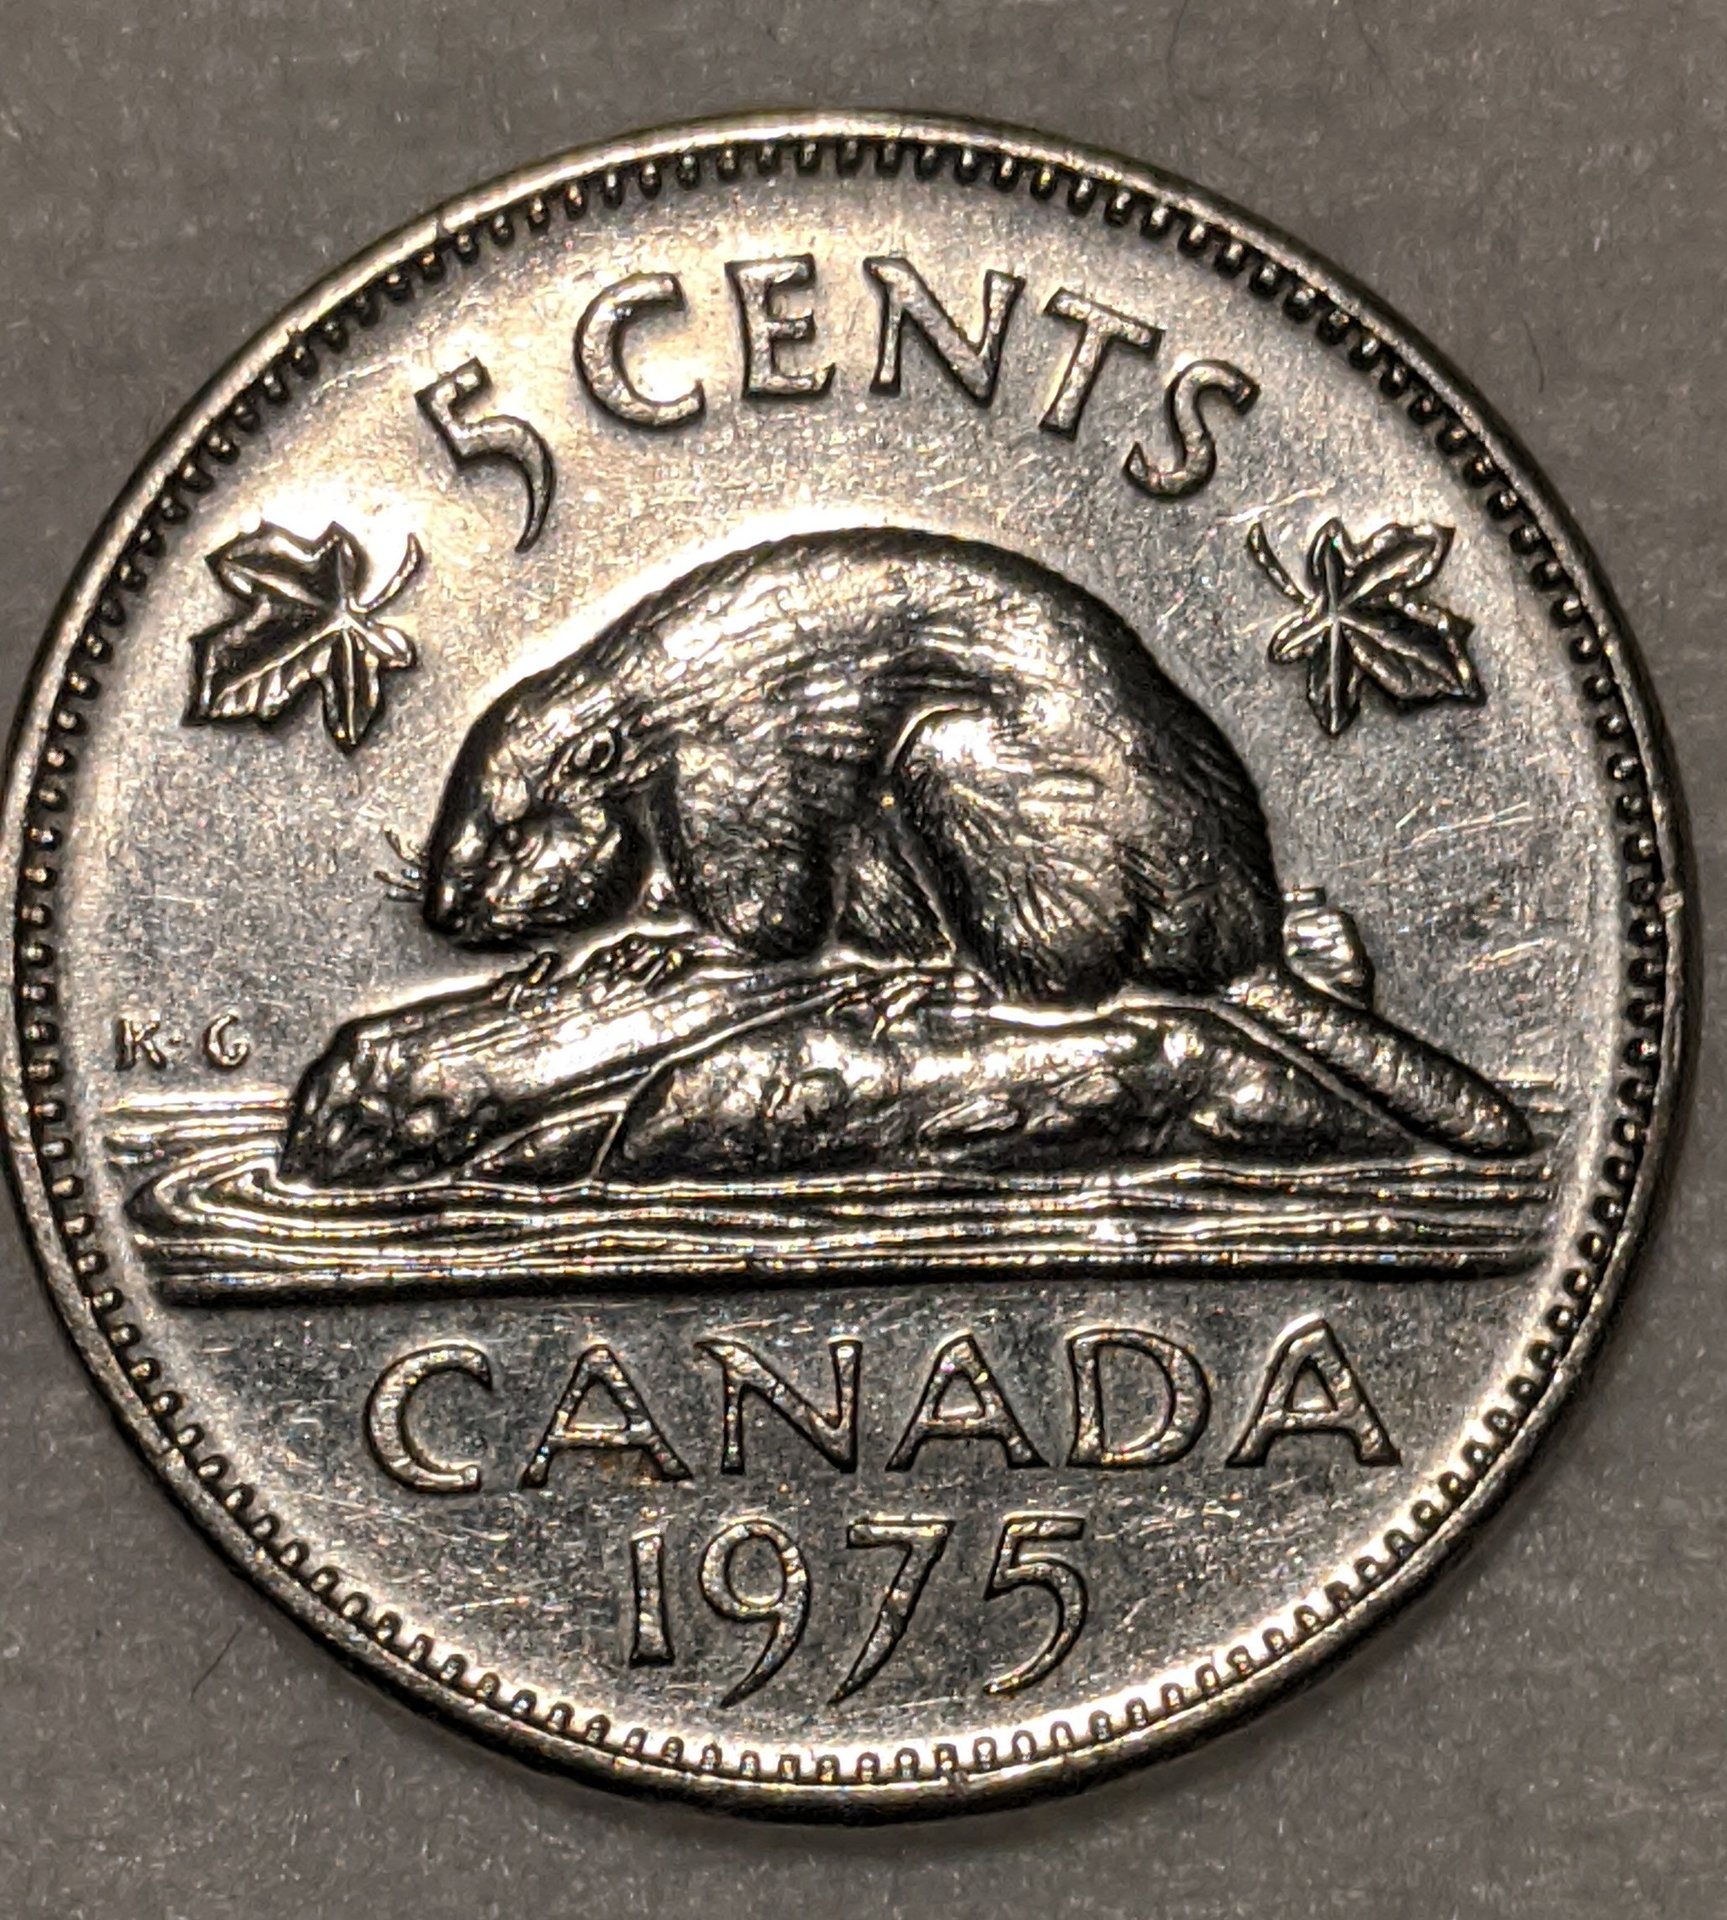 Canadian Coins | Coin Talk